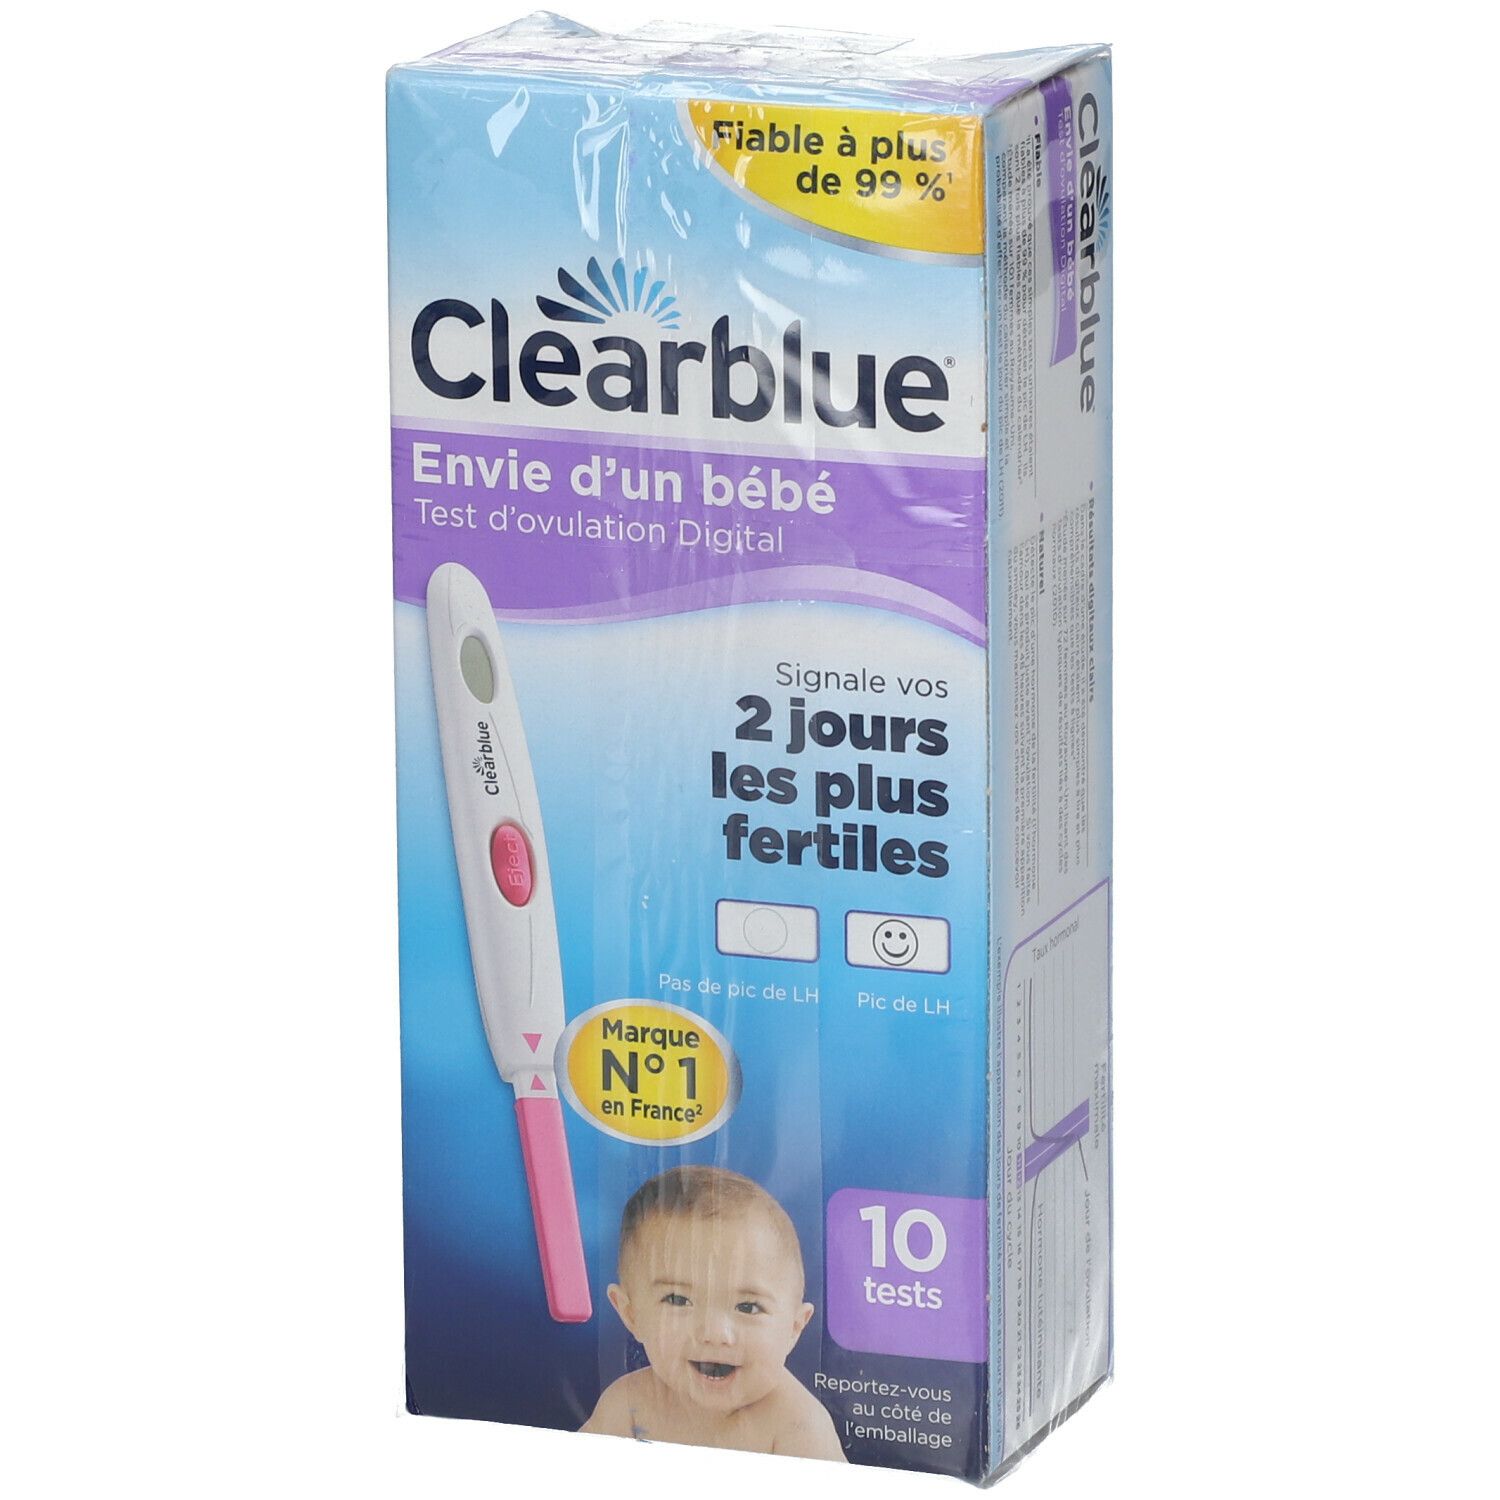 Clearblue Test d'Ovulation Digital Kit